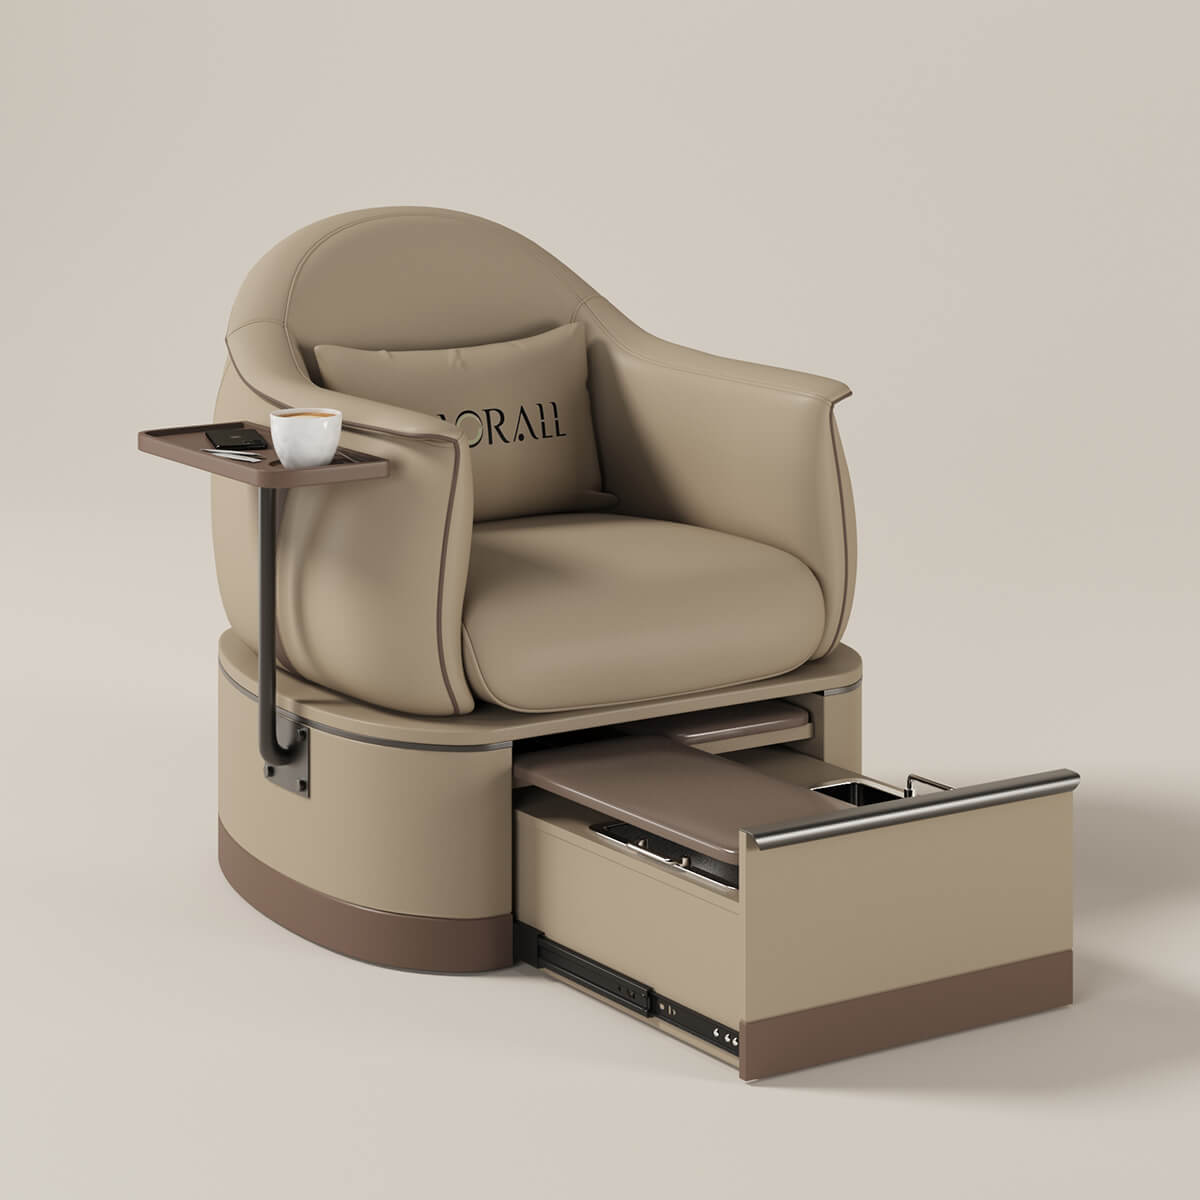 Glorall pedicure spa chair nail furniture modern design new spa chair for beauty salon (2)